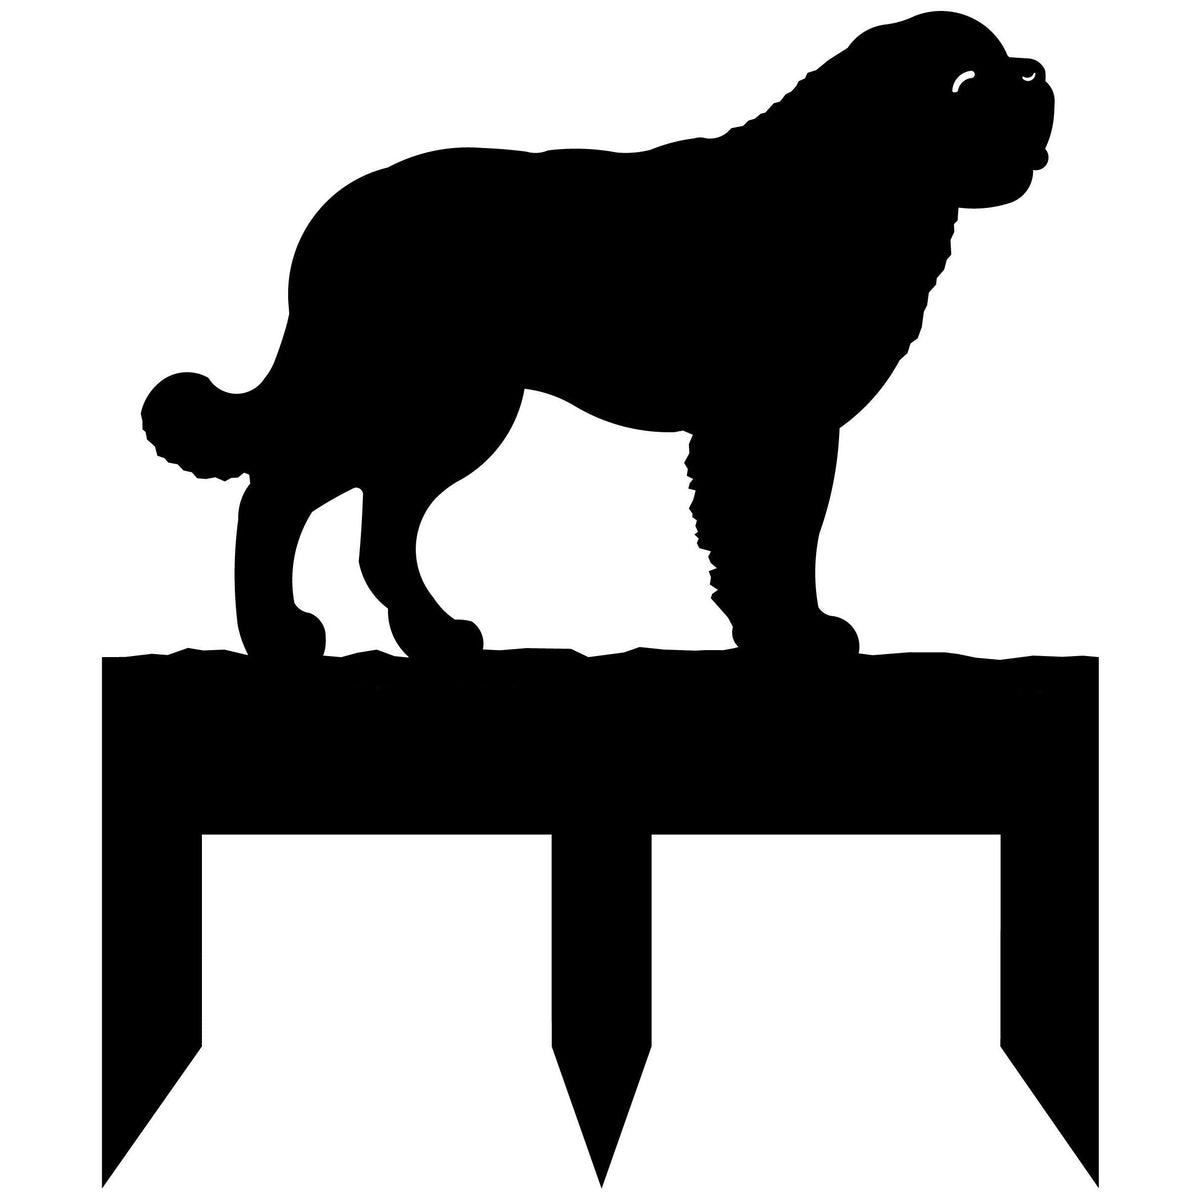 St. Bernard dog address stake